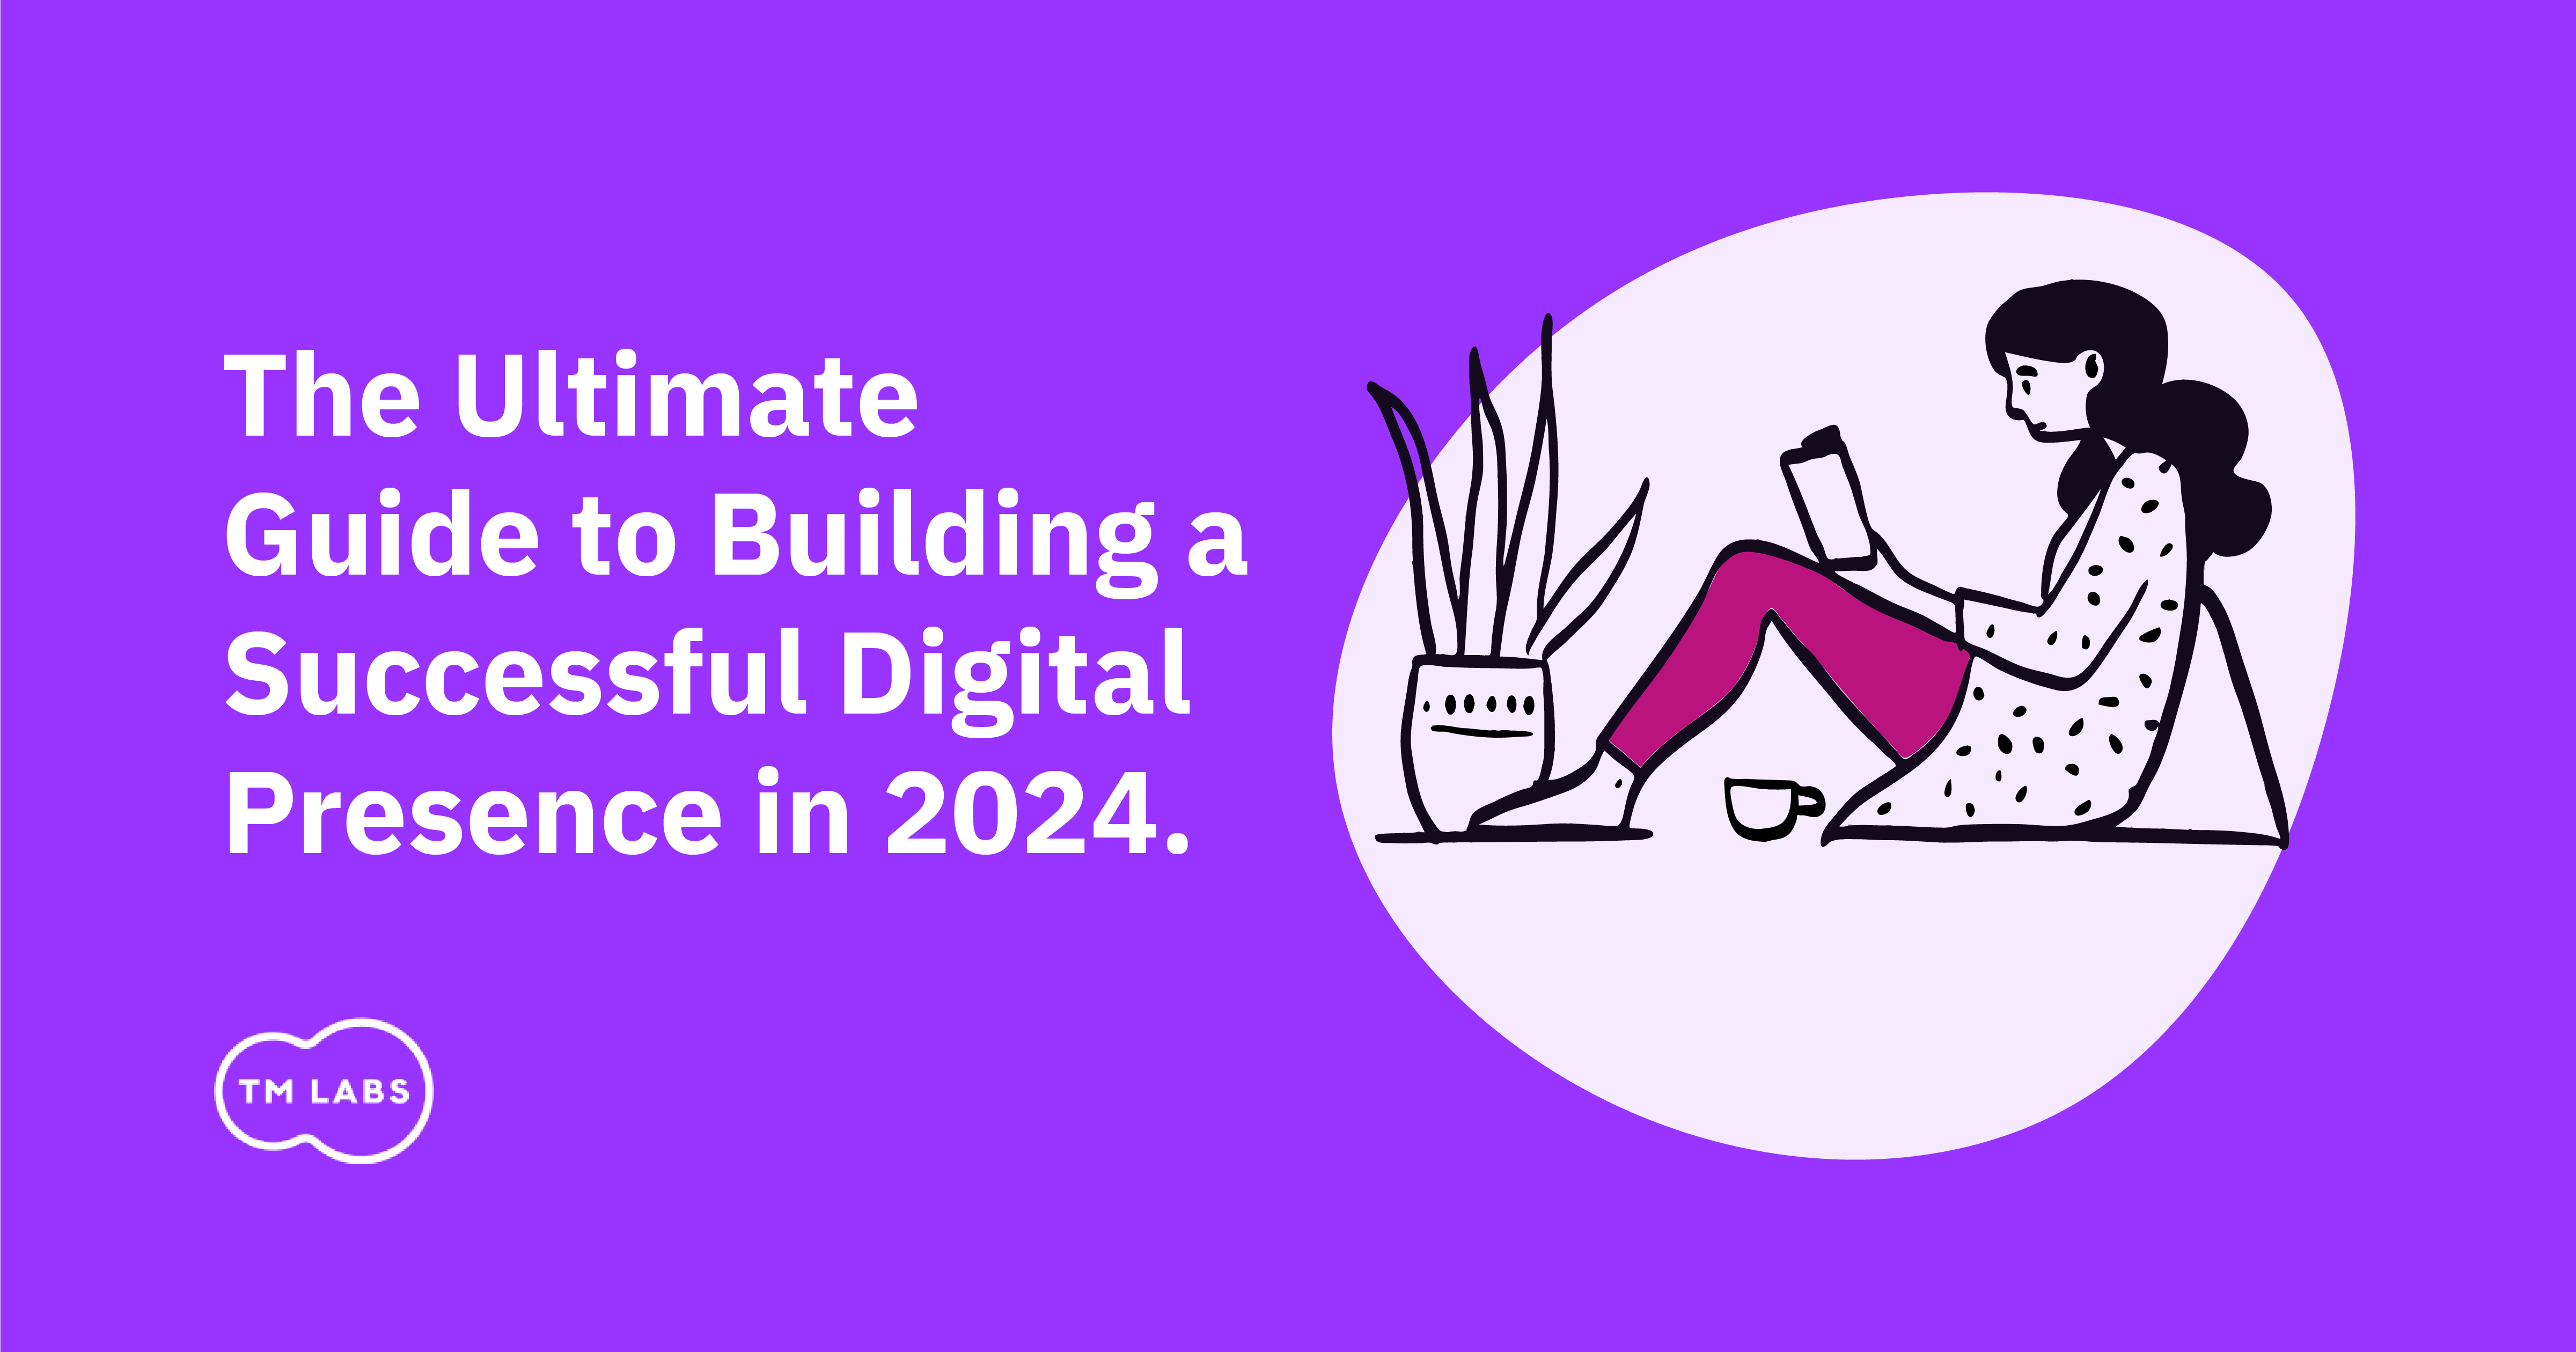 Building a Successful Digital Presence in 2024